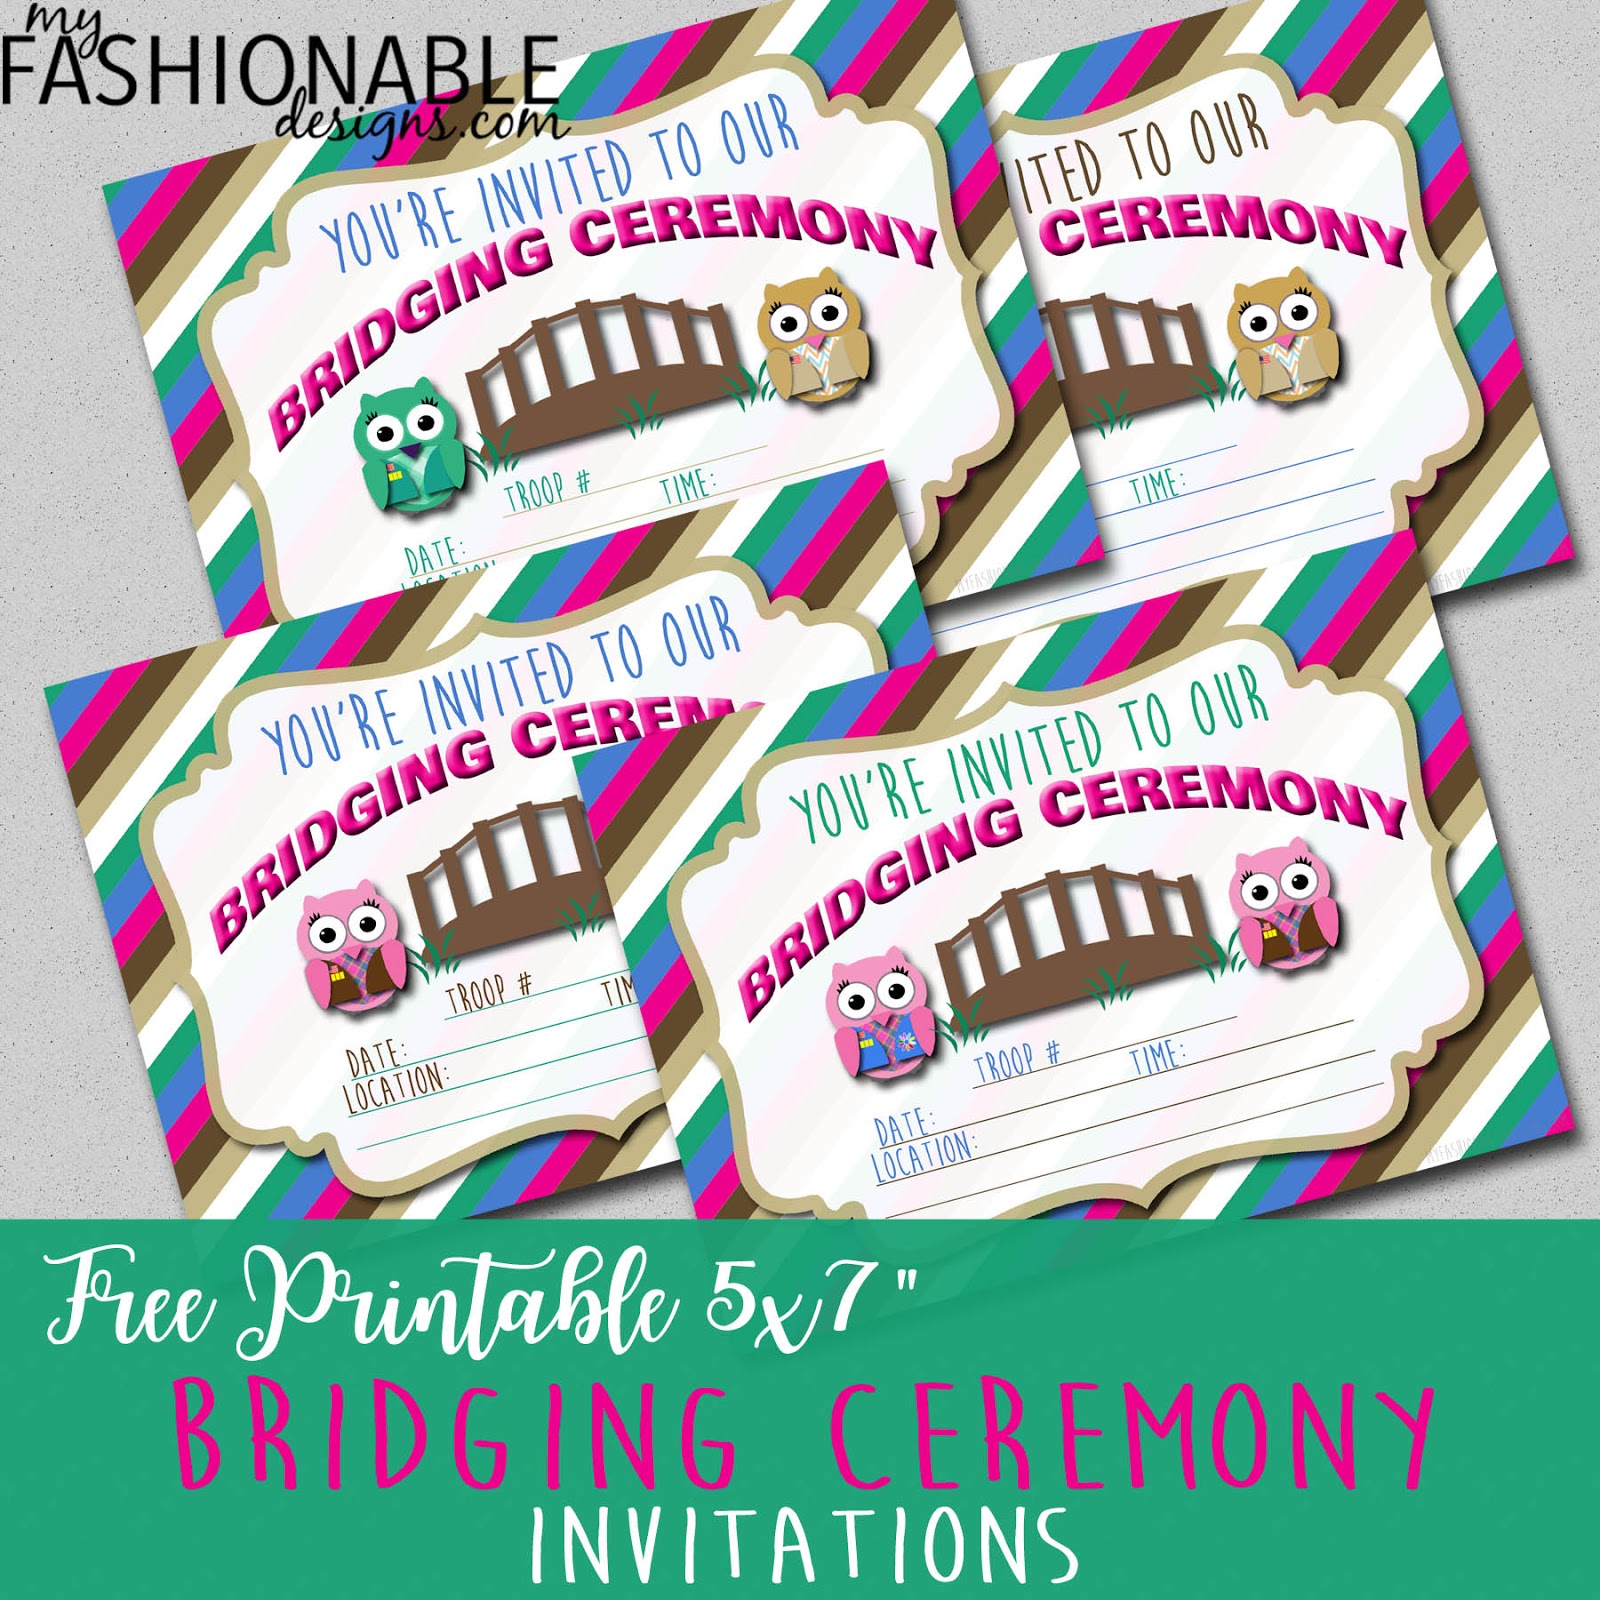 my-fashionable-designs-free-printable-bridging-ceremony-invitations-owls